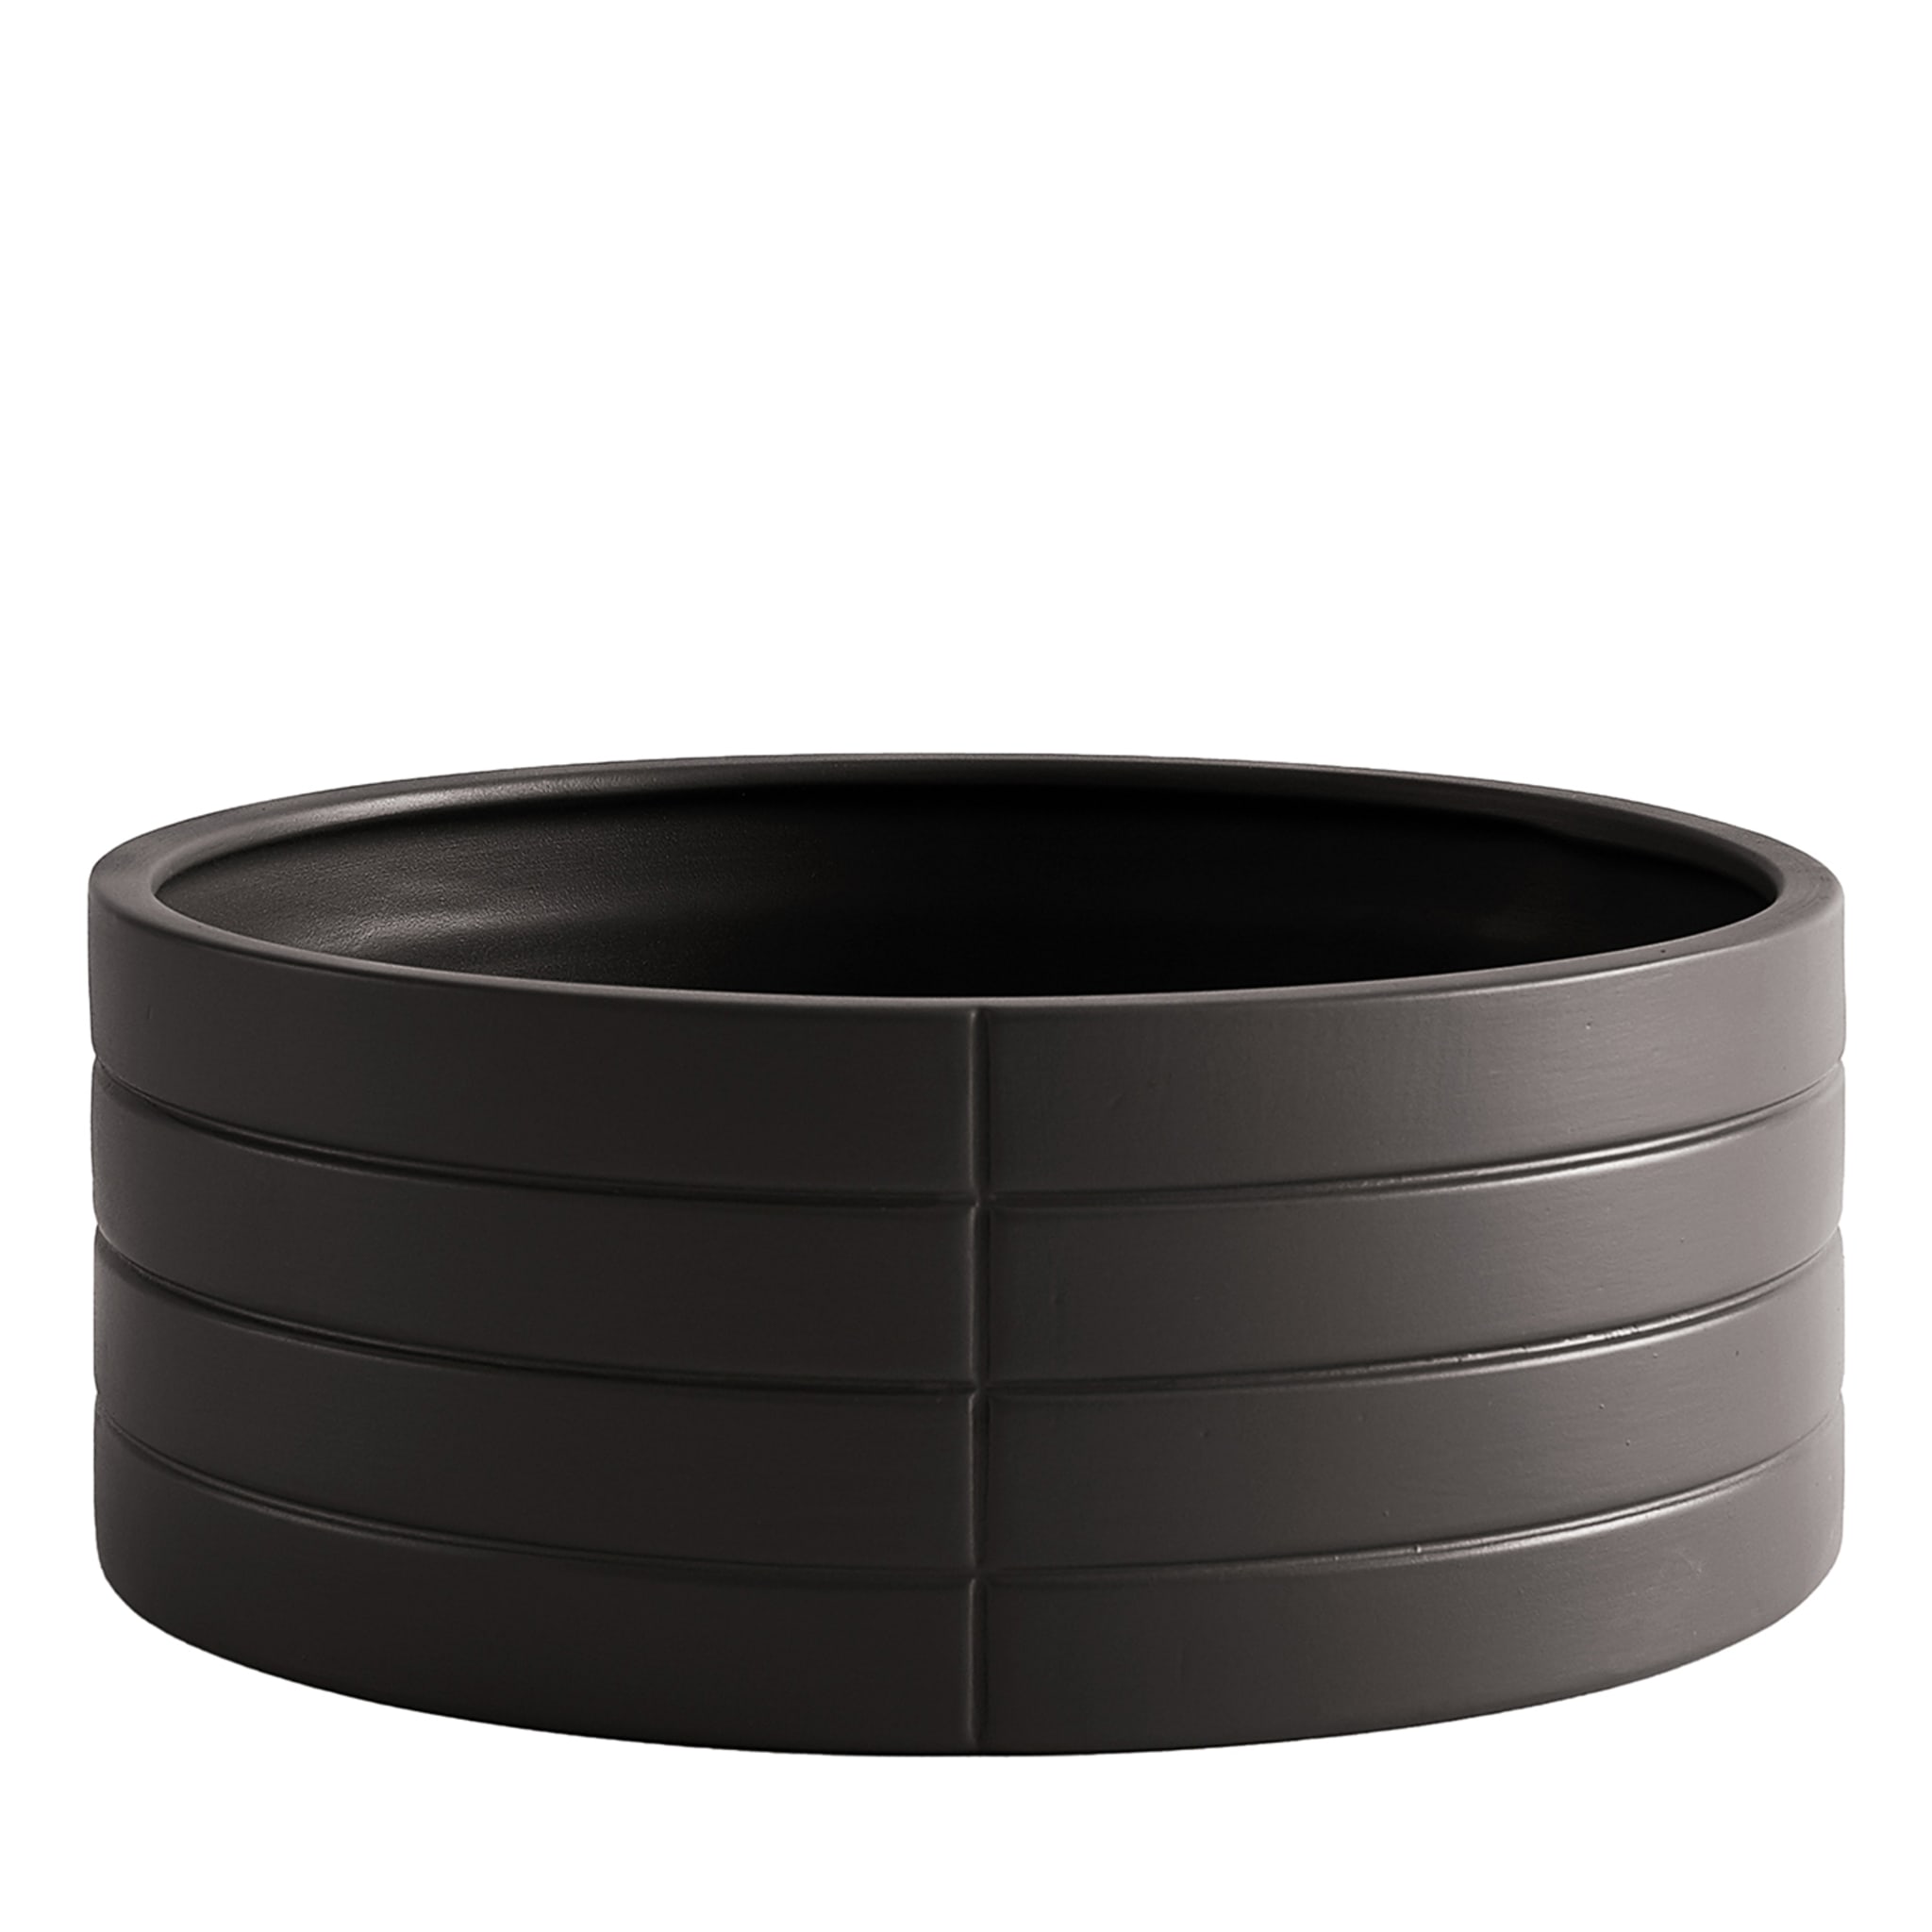 Rikuadra Vaso in ceramica nera #1 - Vista principale